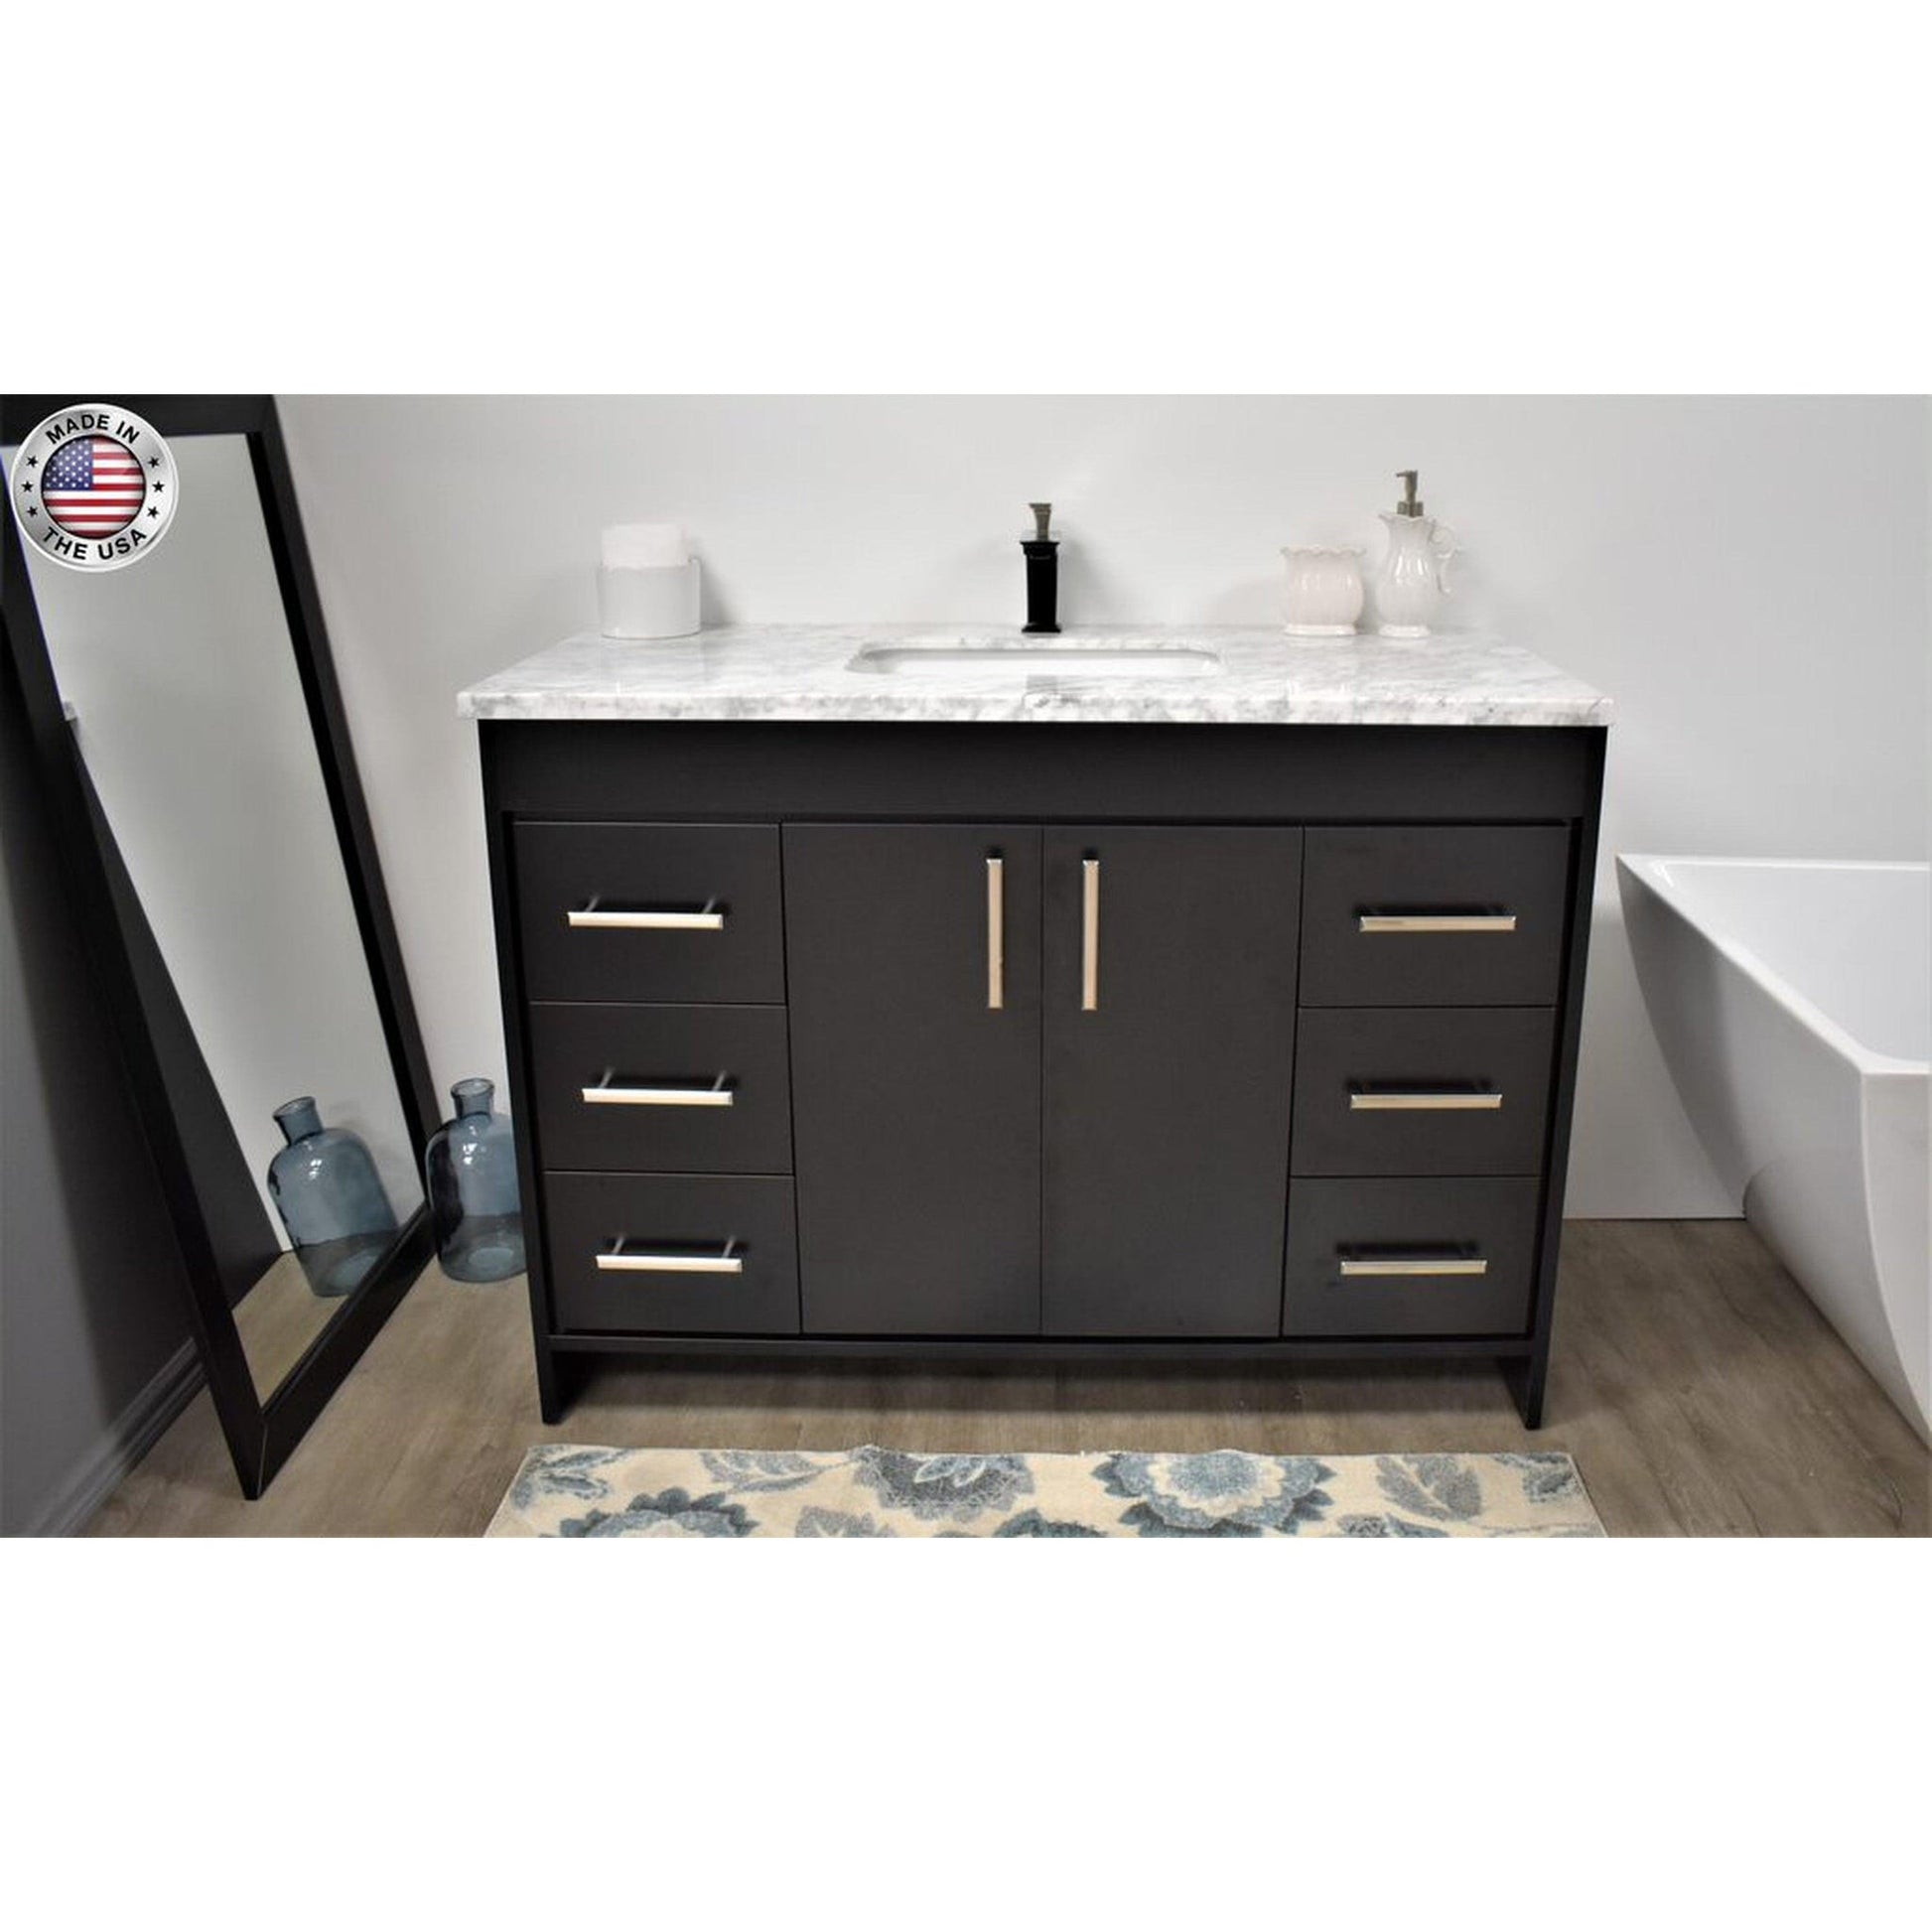 Volpa USA Capri 48" x 22" Black Freestanding Modern Bathroom Vanity With Preinstalled Undermount Sink And Carrara Marble top With Brushed Nickel Edge Handles